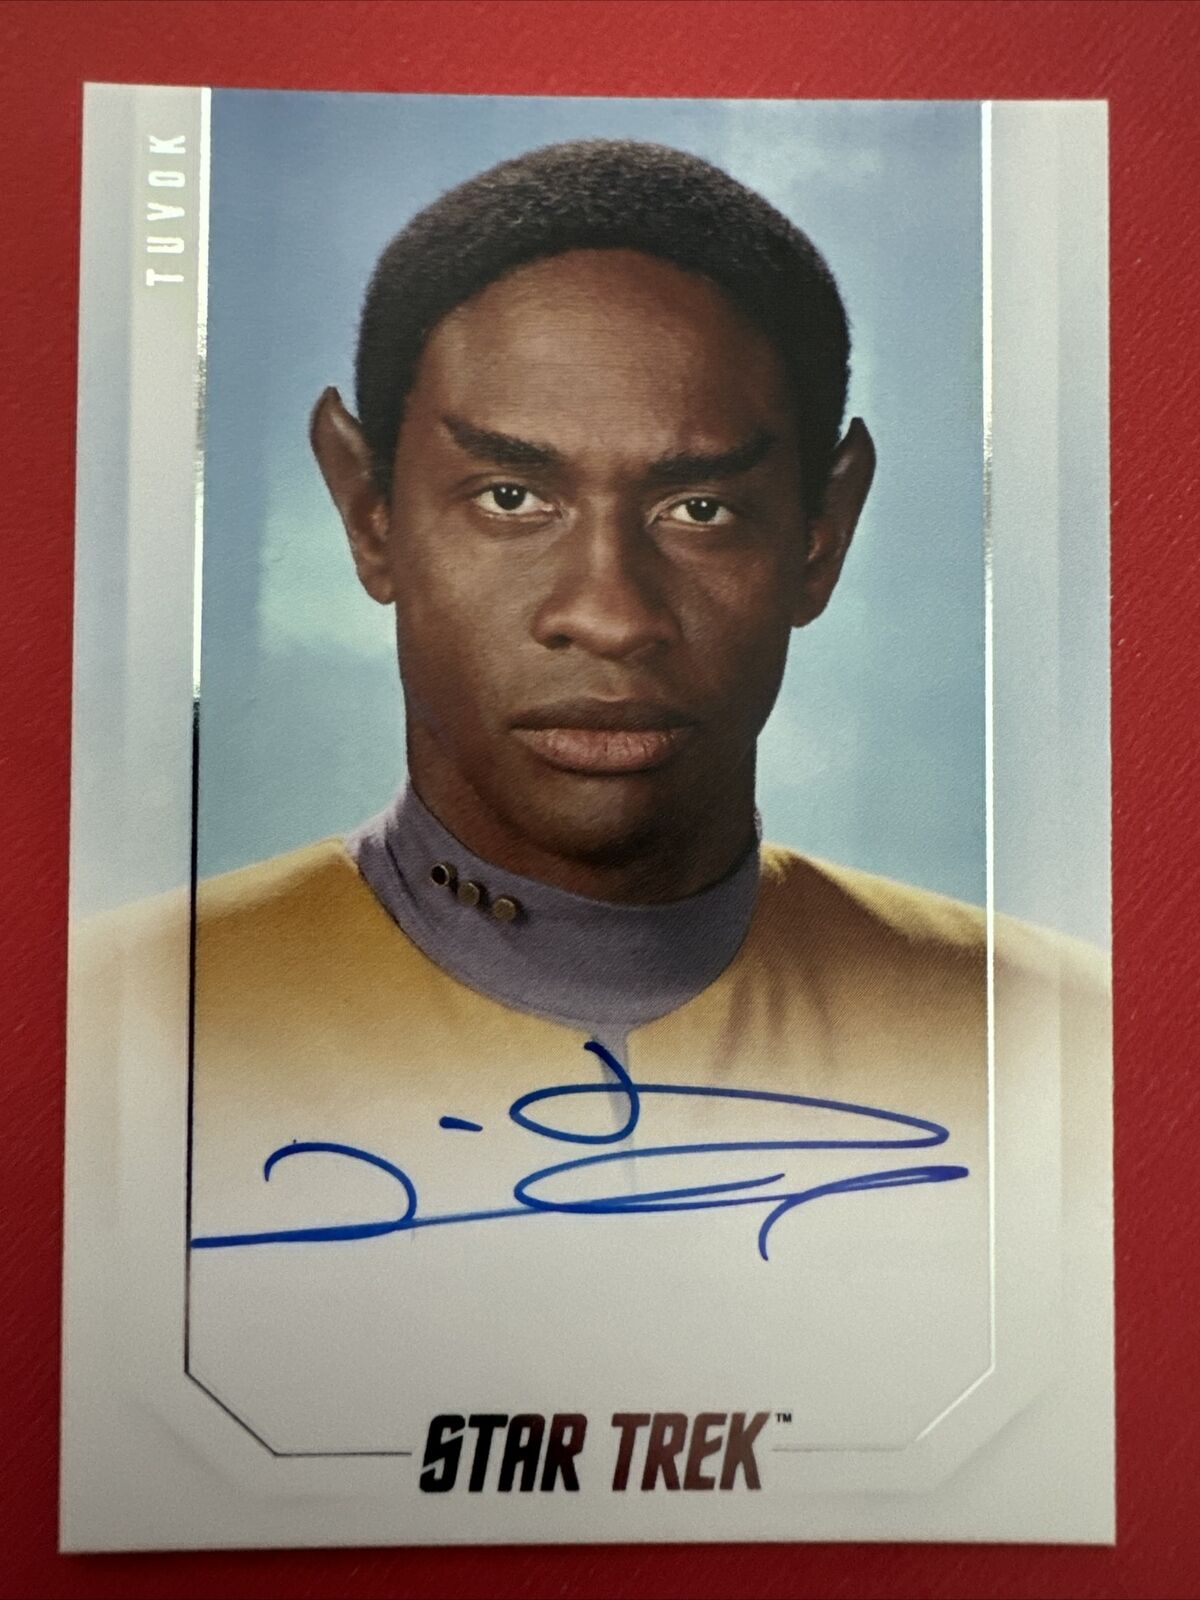 2019 Star Trek Inflexions Bridge Crew Autograph Tim Russ As Tuvok Autograph Card